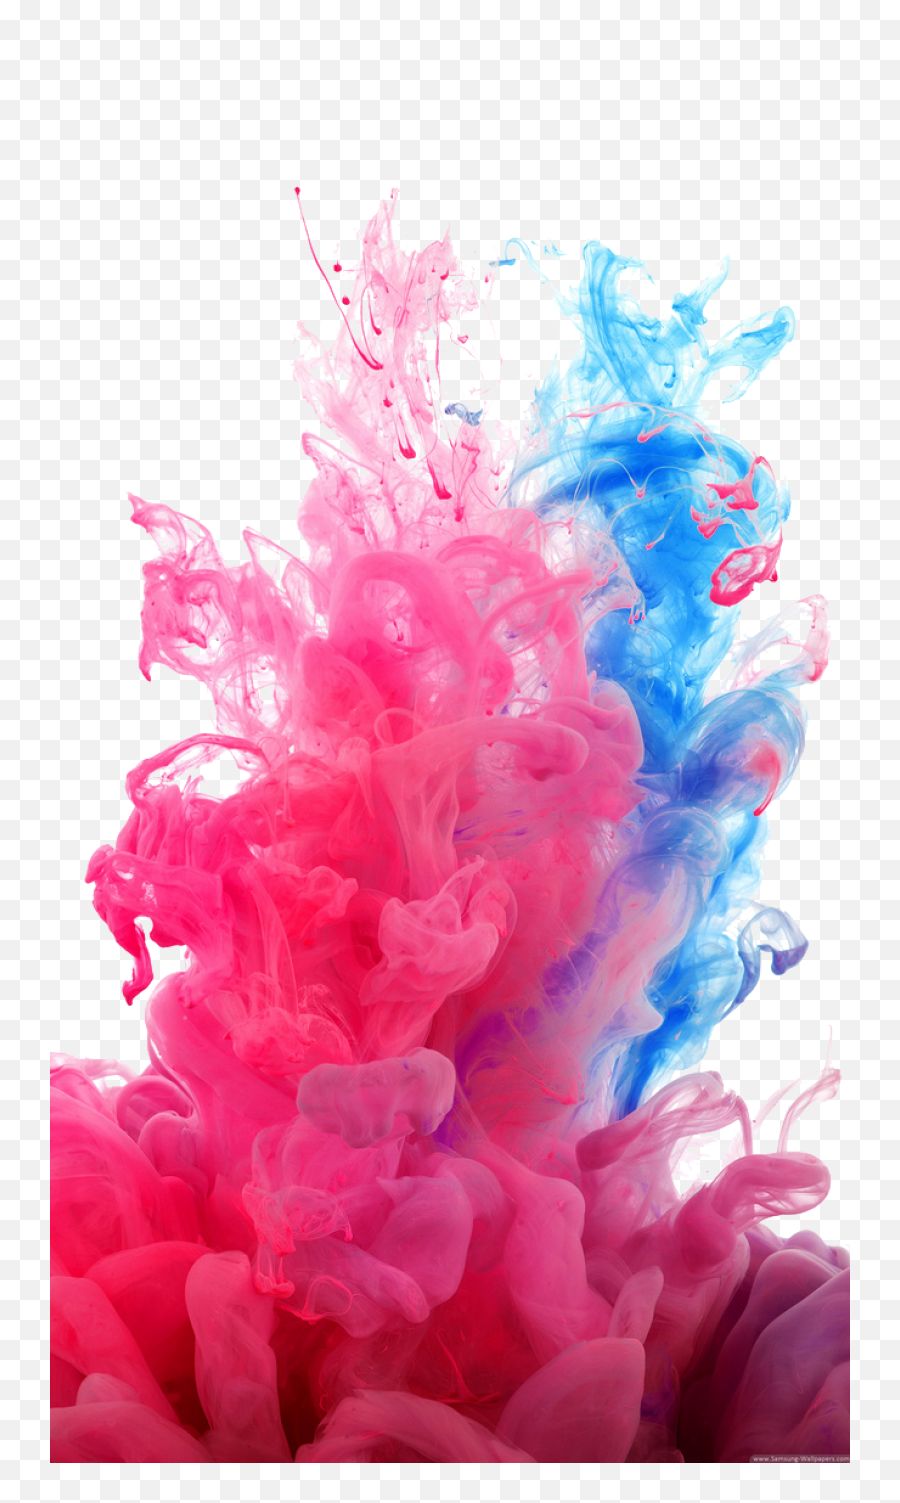 Download Colorful Smoke Png Image For Free - Fondos De Pantalla De Lg  G3,Smoke Png - free transparent png images 